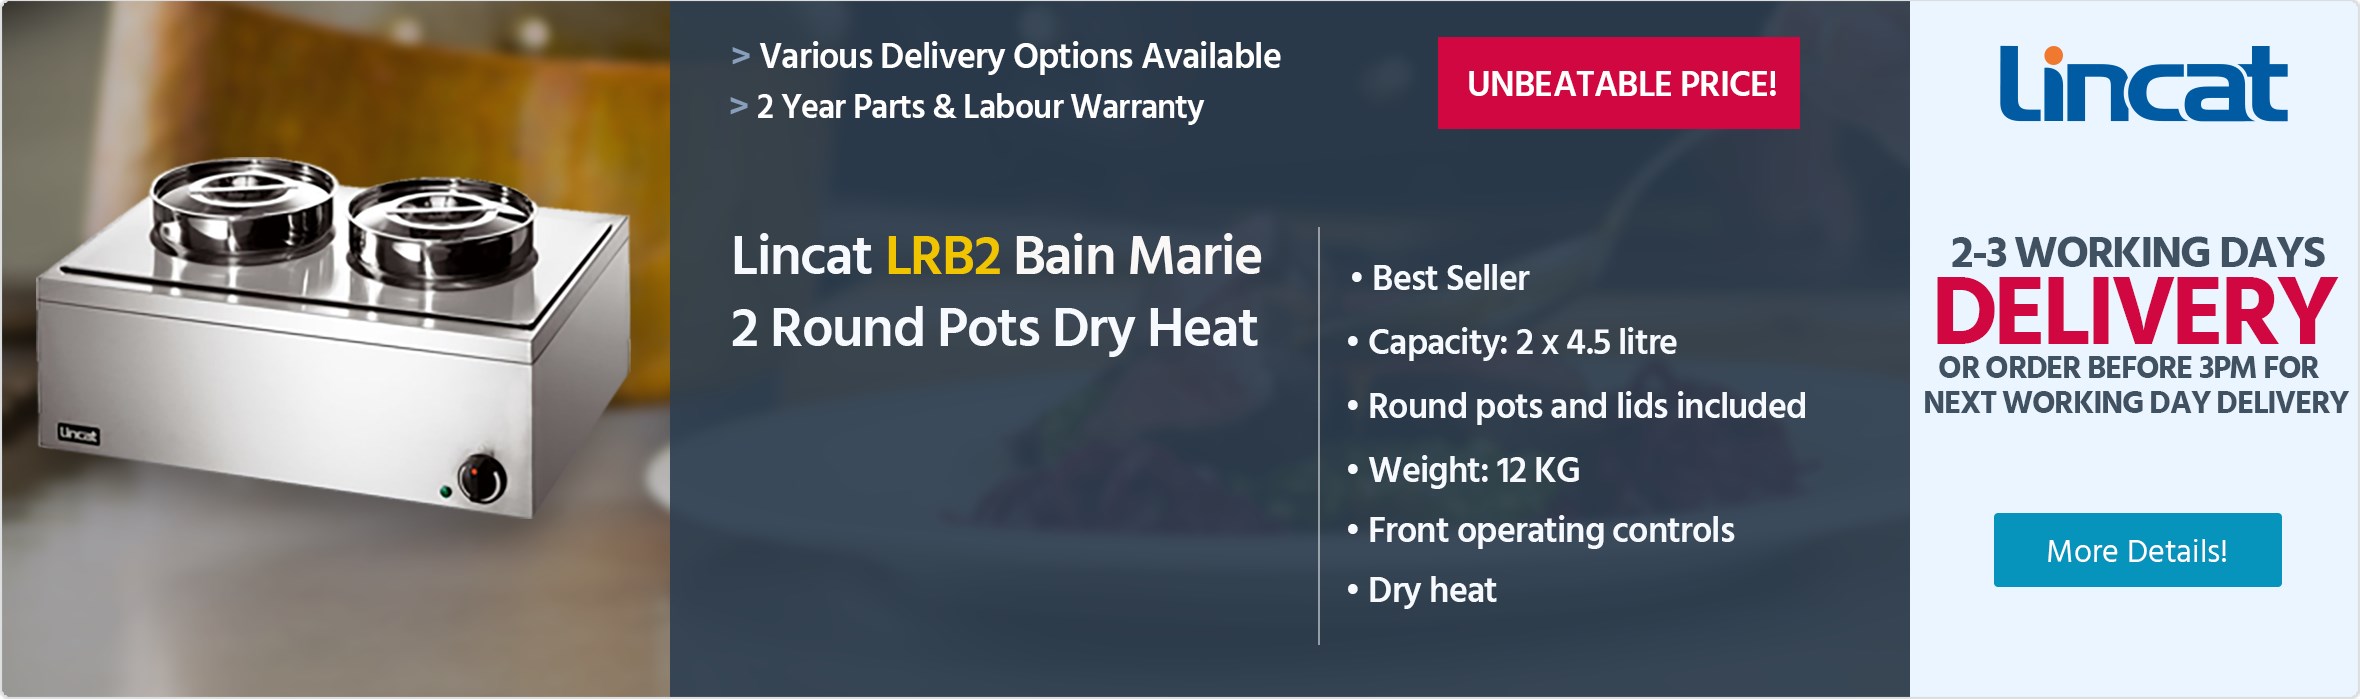 Lincat Lynx 400 LRB2 Bain Marie 2 Round Pots Dry Heat (4.5 Ltr)